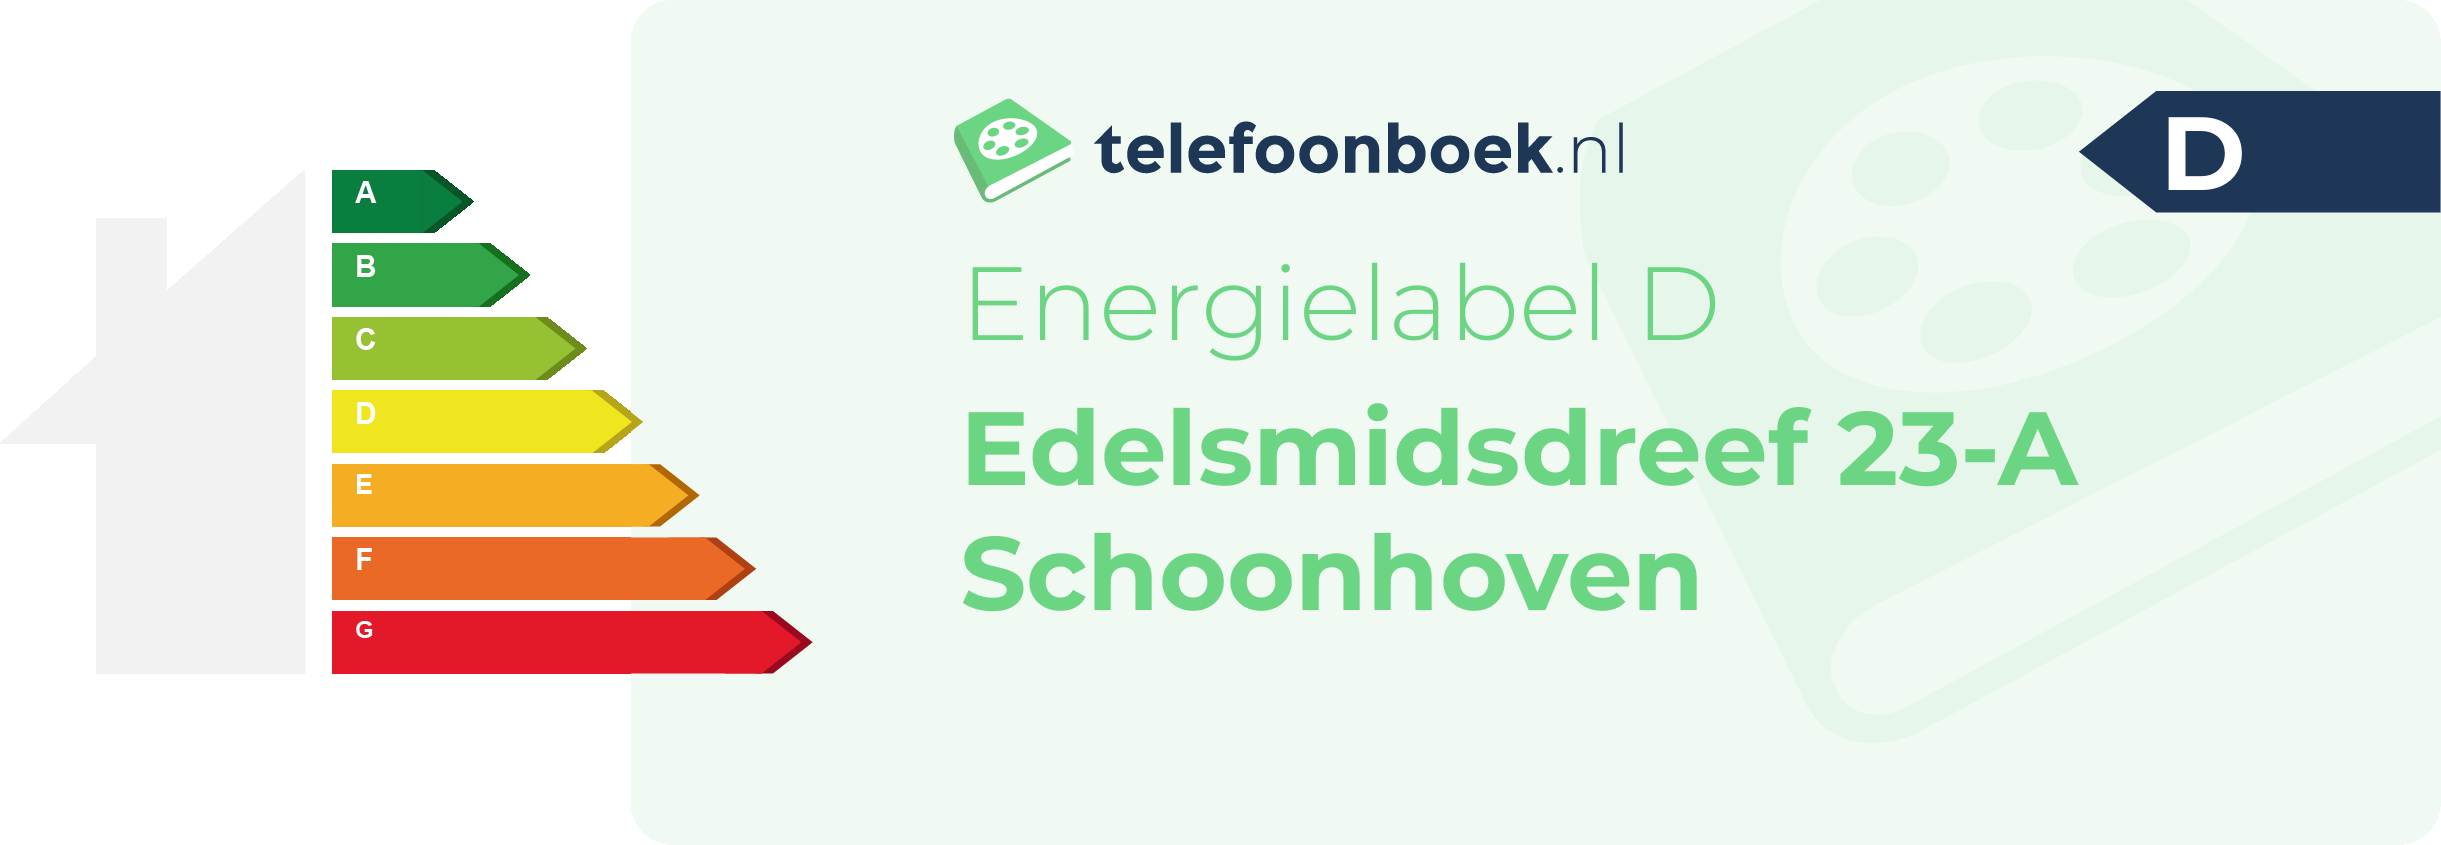 Energielabel Edelsmidsdreef 23-A Schoonhoven